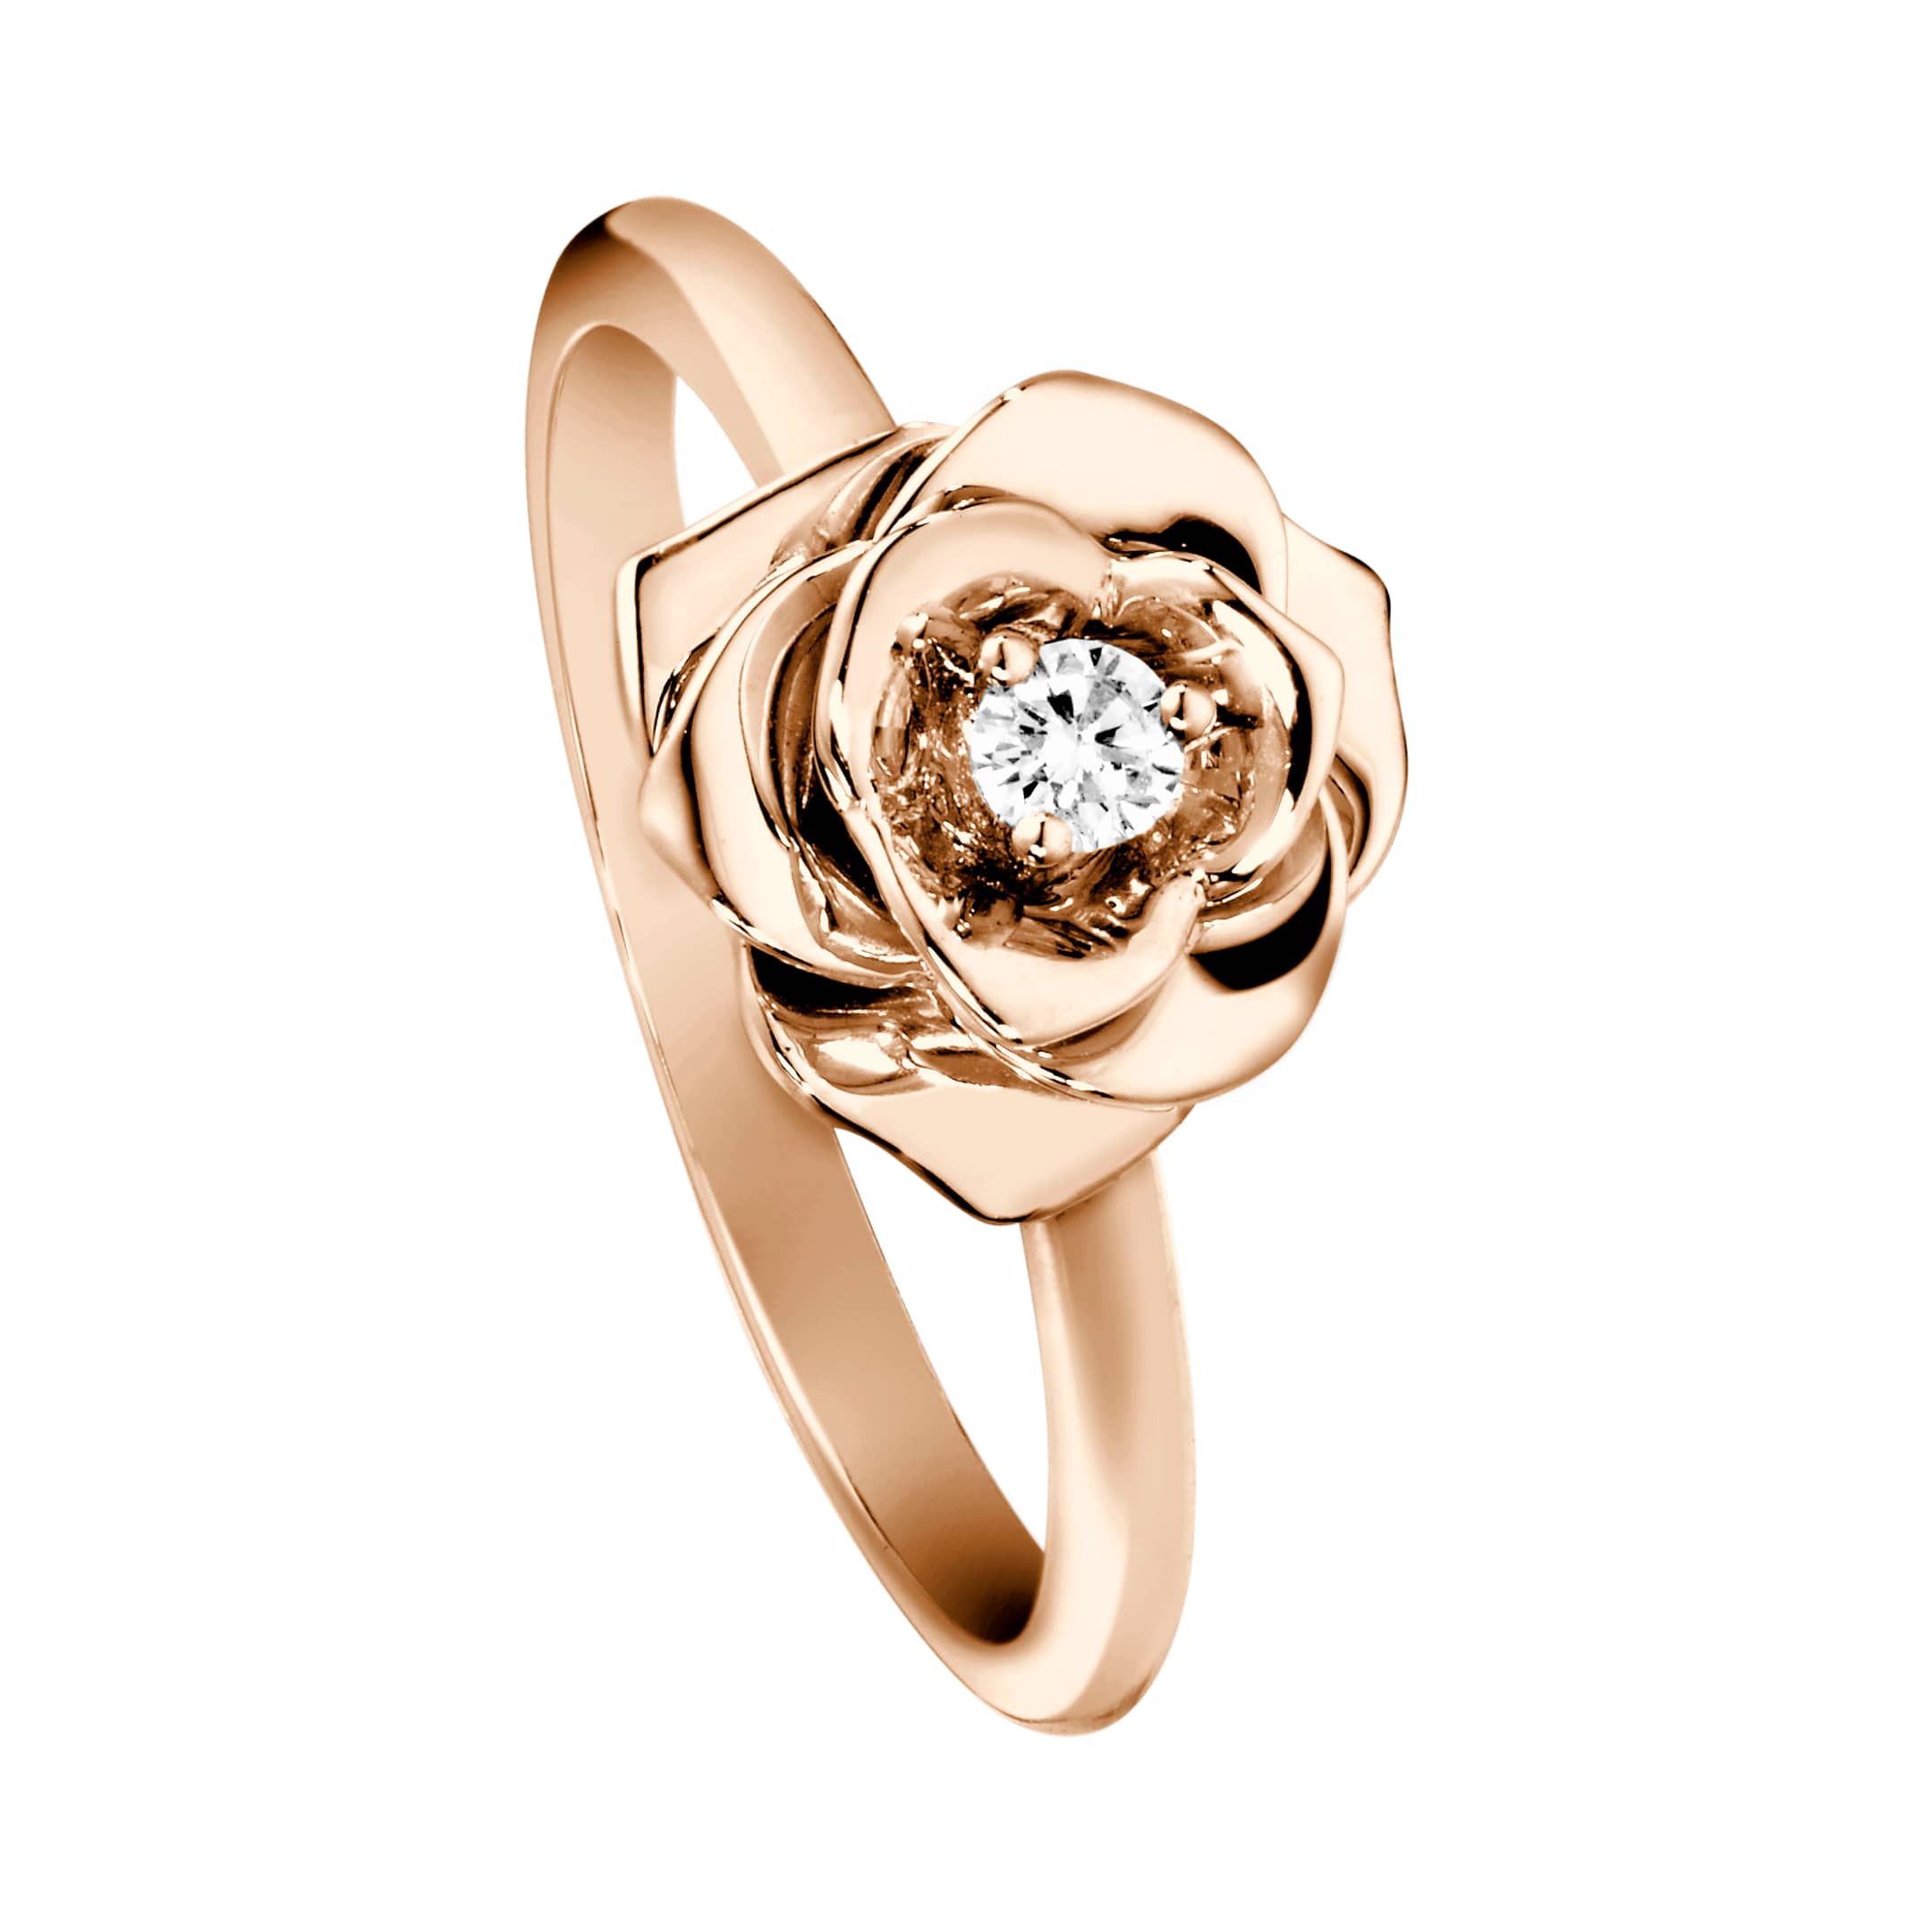 Fabel Vroegst Ziekte Rose gold Diamond Ring G34UR400 - Piaget Luxury Jewelry Online